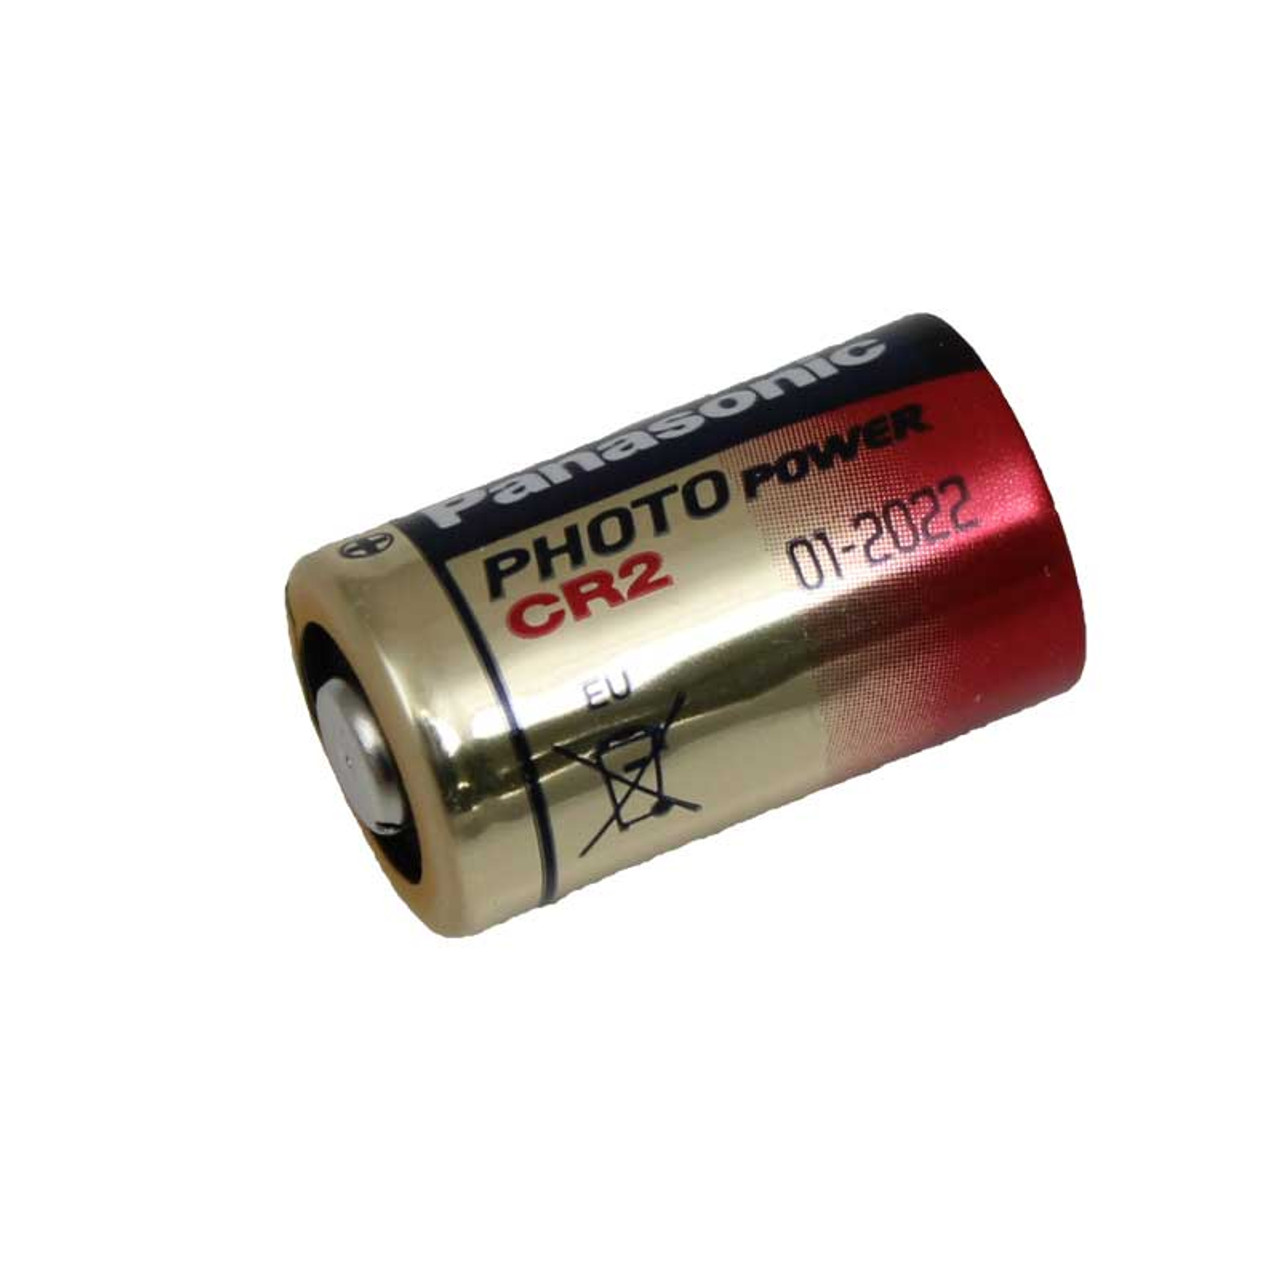 3v Lithium Camera Battery CR2